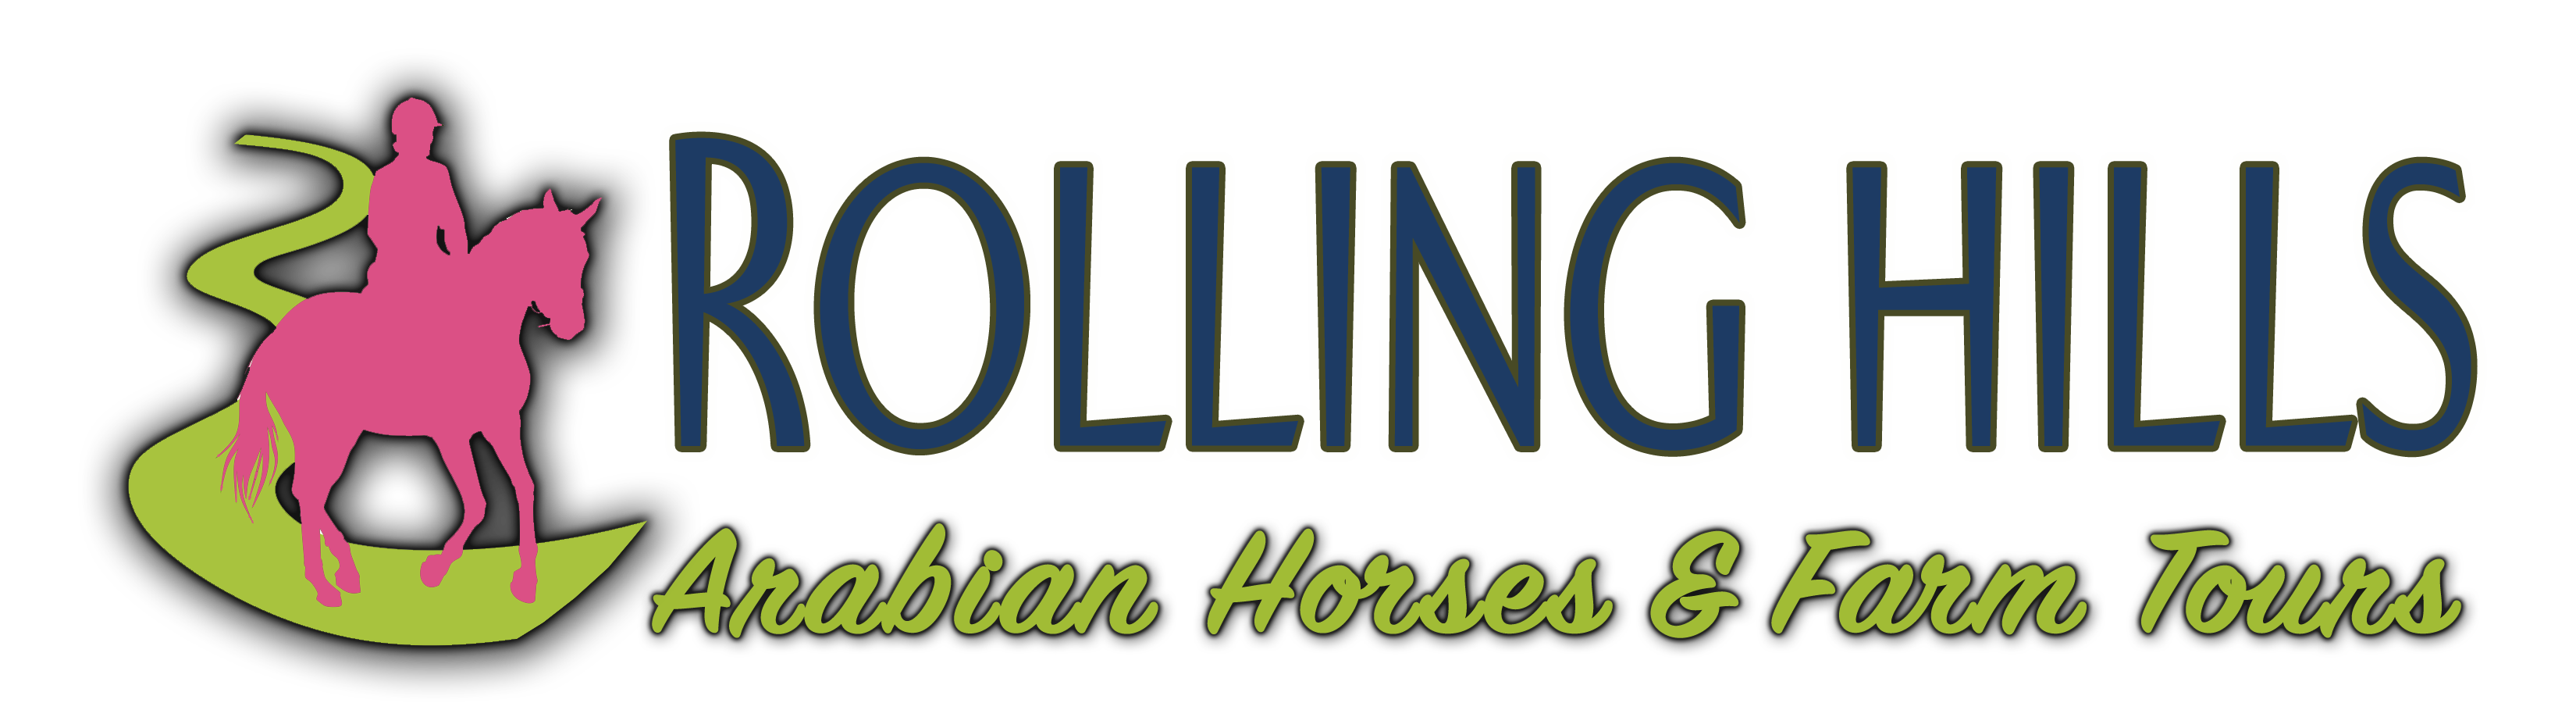 Rolling Hills Arabian Horses and Farm Tours